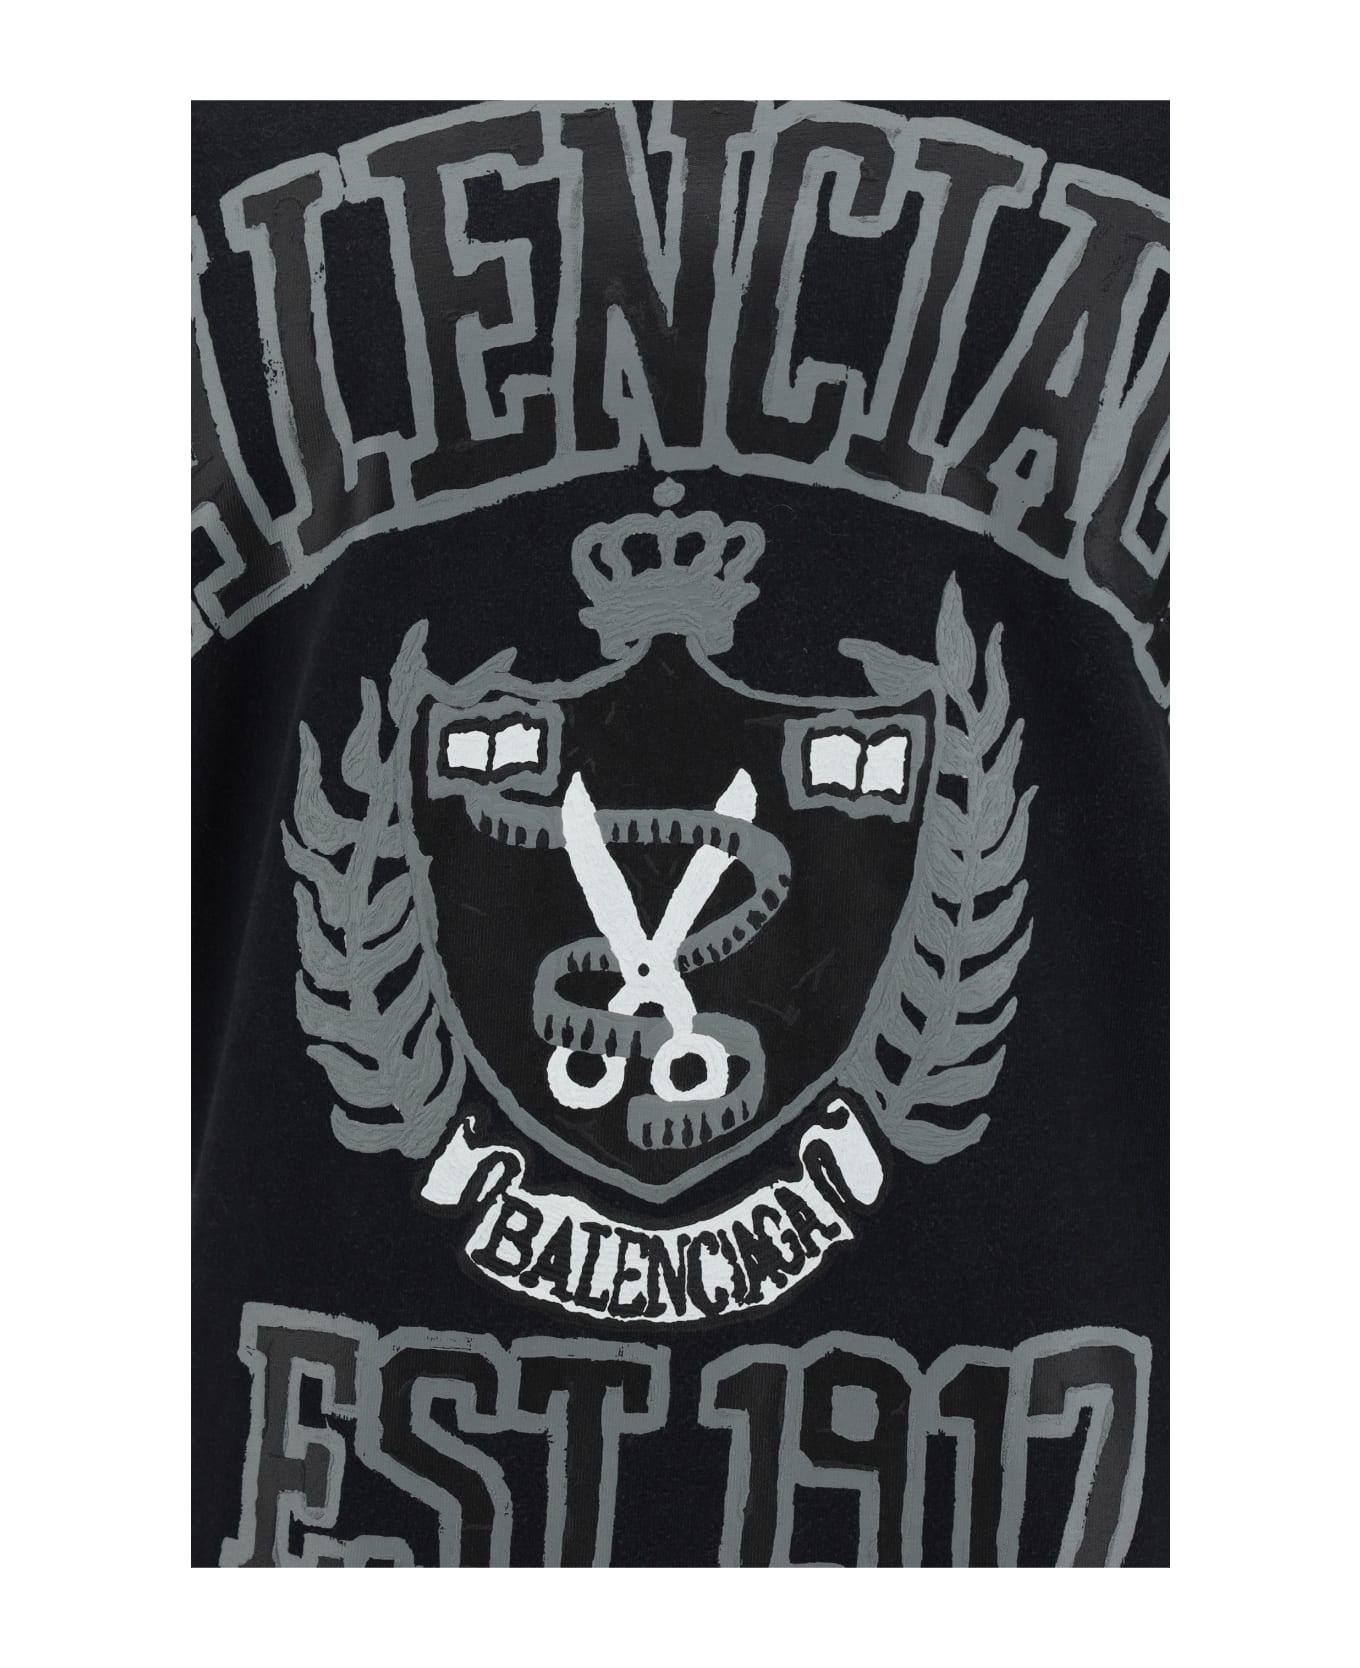 Balenciaga College Logo T-shirt - Washedblack/black シャツ